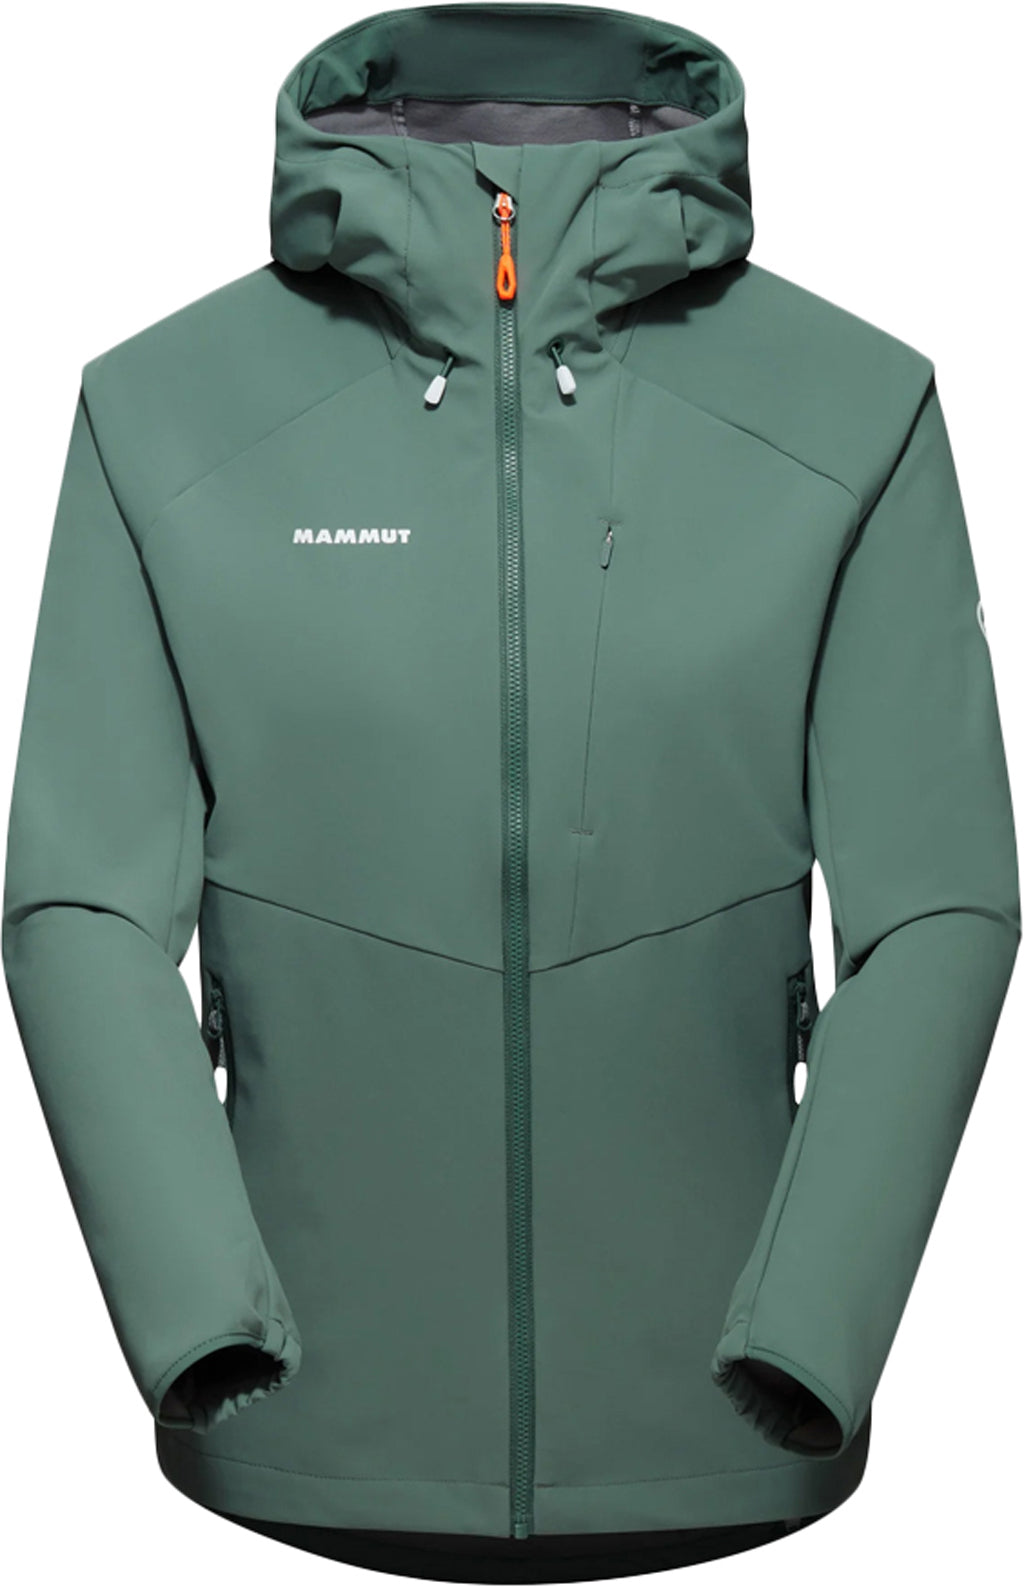 Khaki Green Shower Resistant Softshell Hooded Jacket